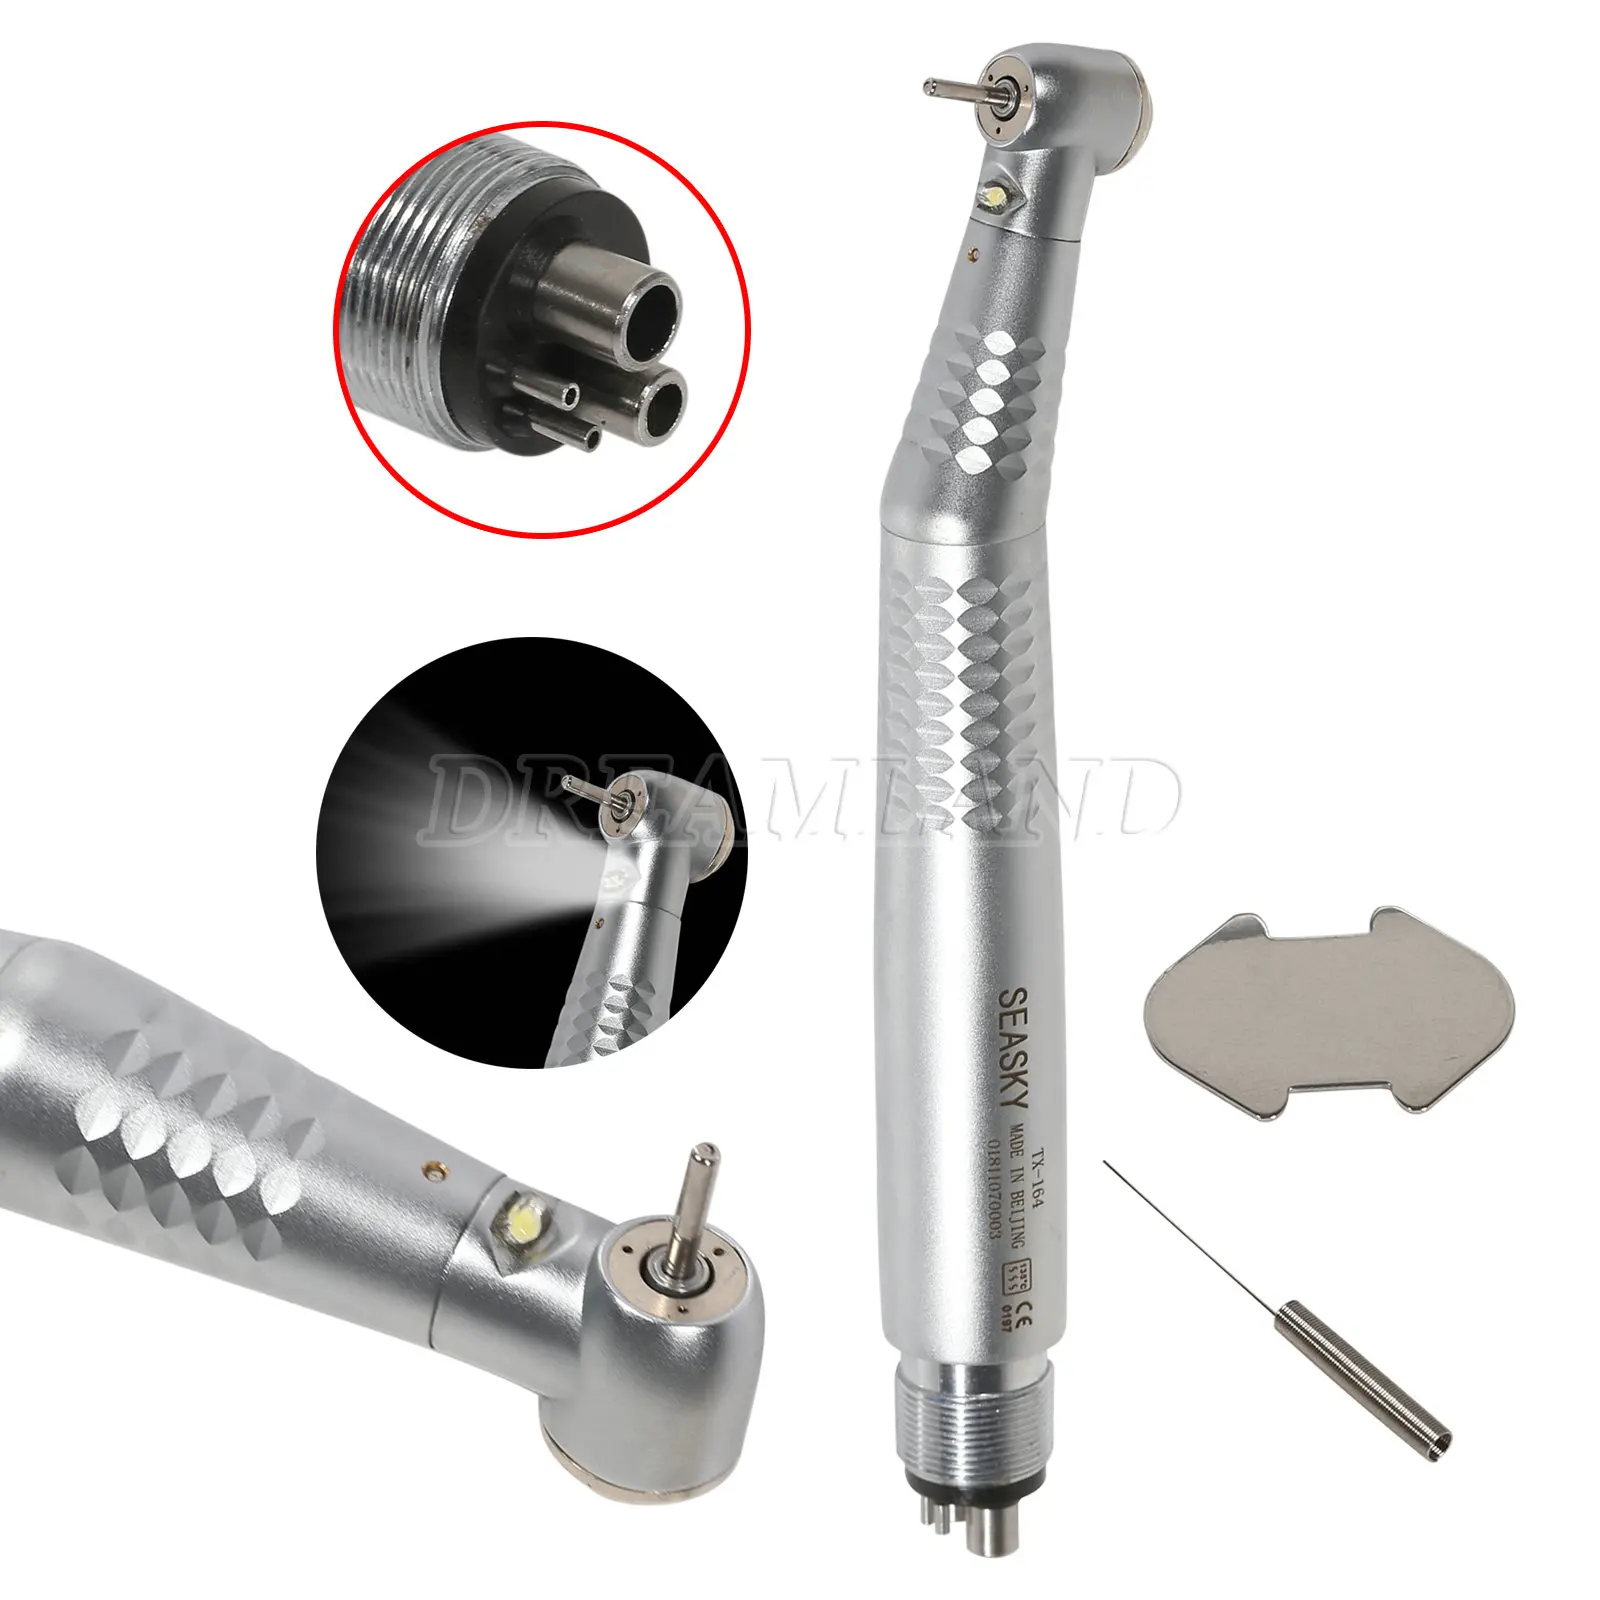 SEASKY Dental E-generator LED Fiber Optic High Speed Triple Spray Handpiece Standard Head 4 Hole Turbine TM4